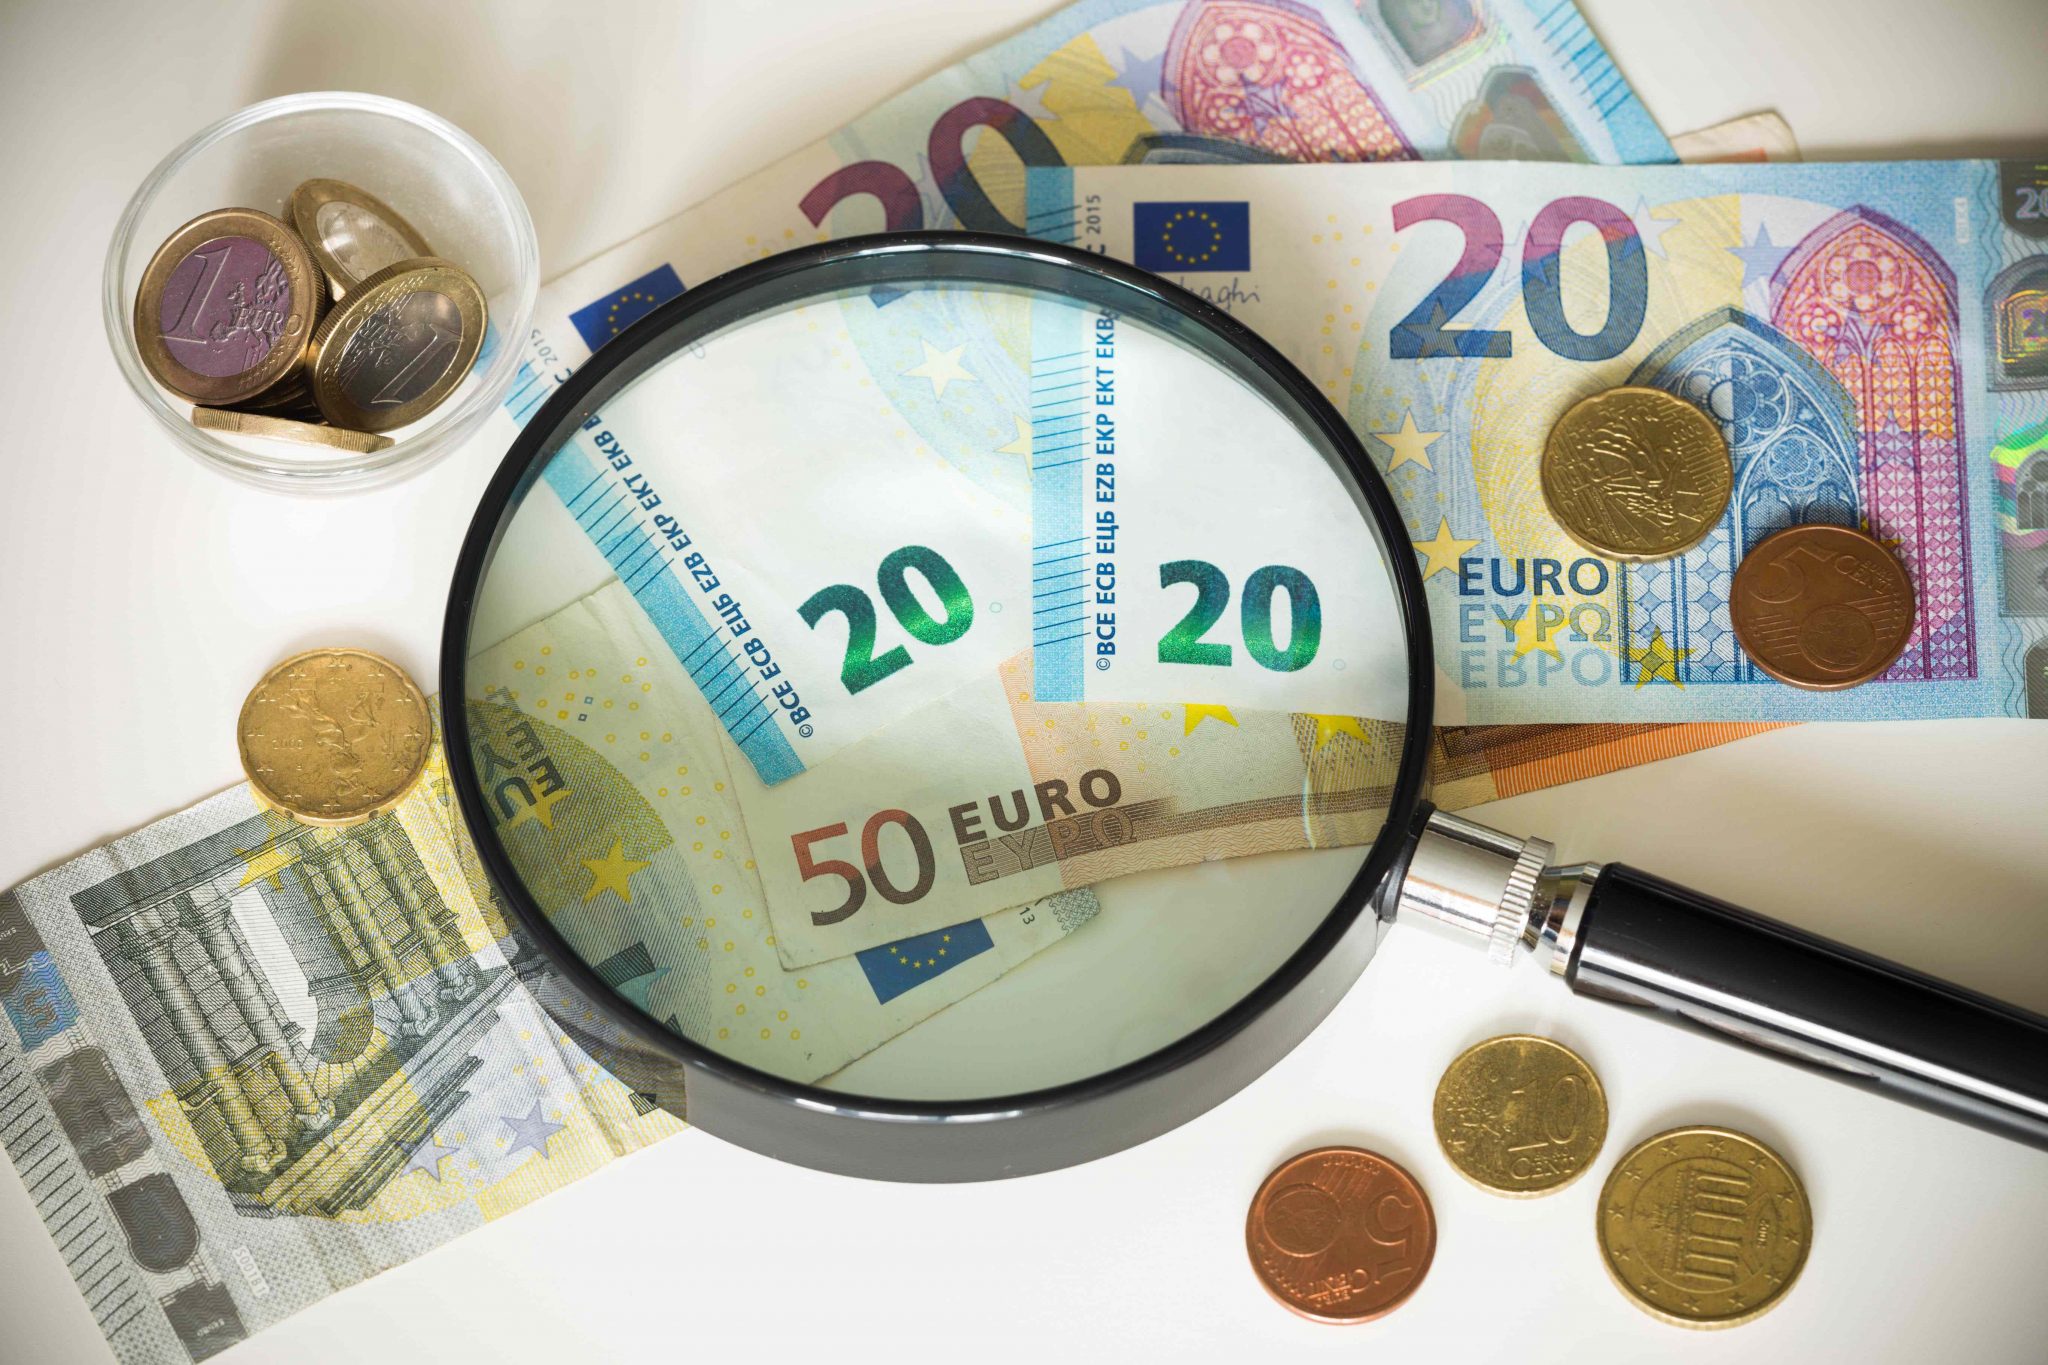 Tax Bureau: More than 4mln Individuals Owe Arrears of 3.4bln€